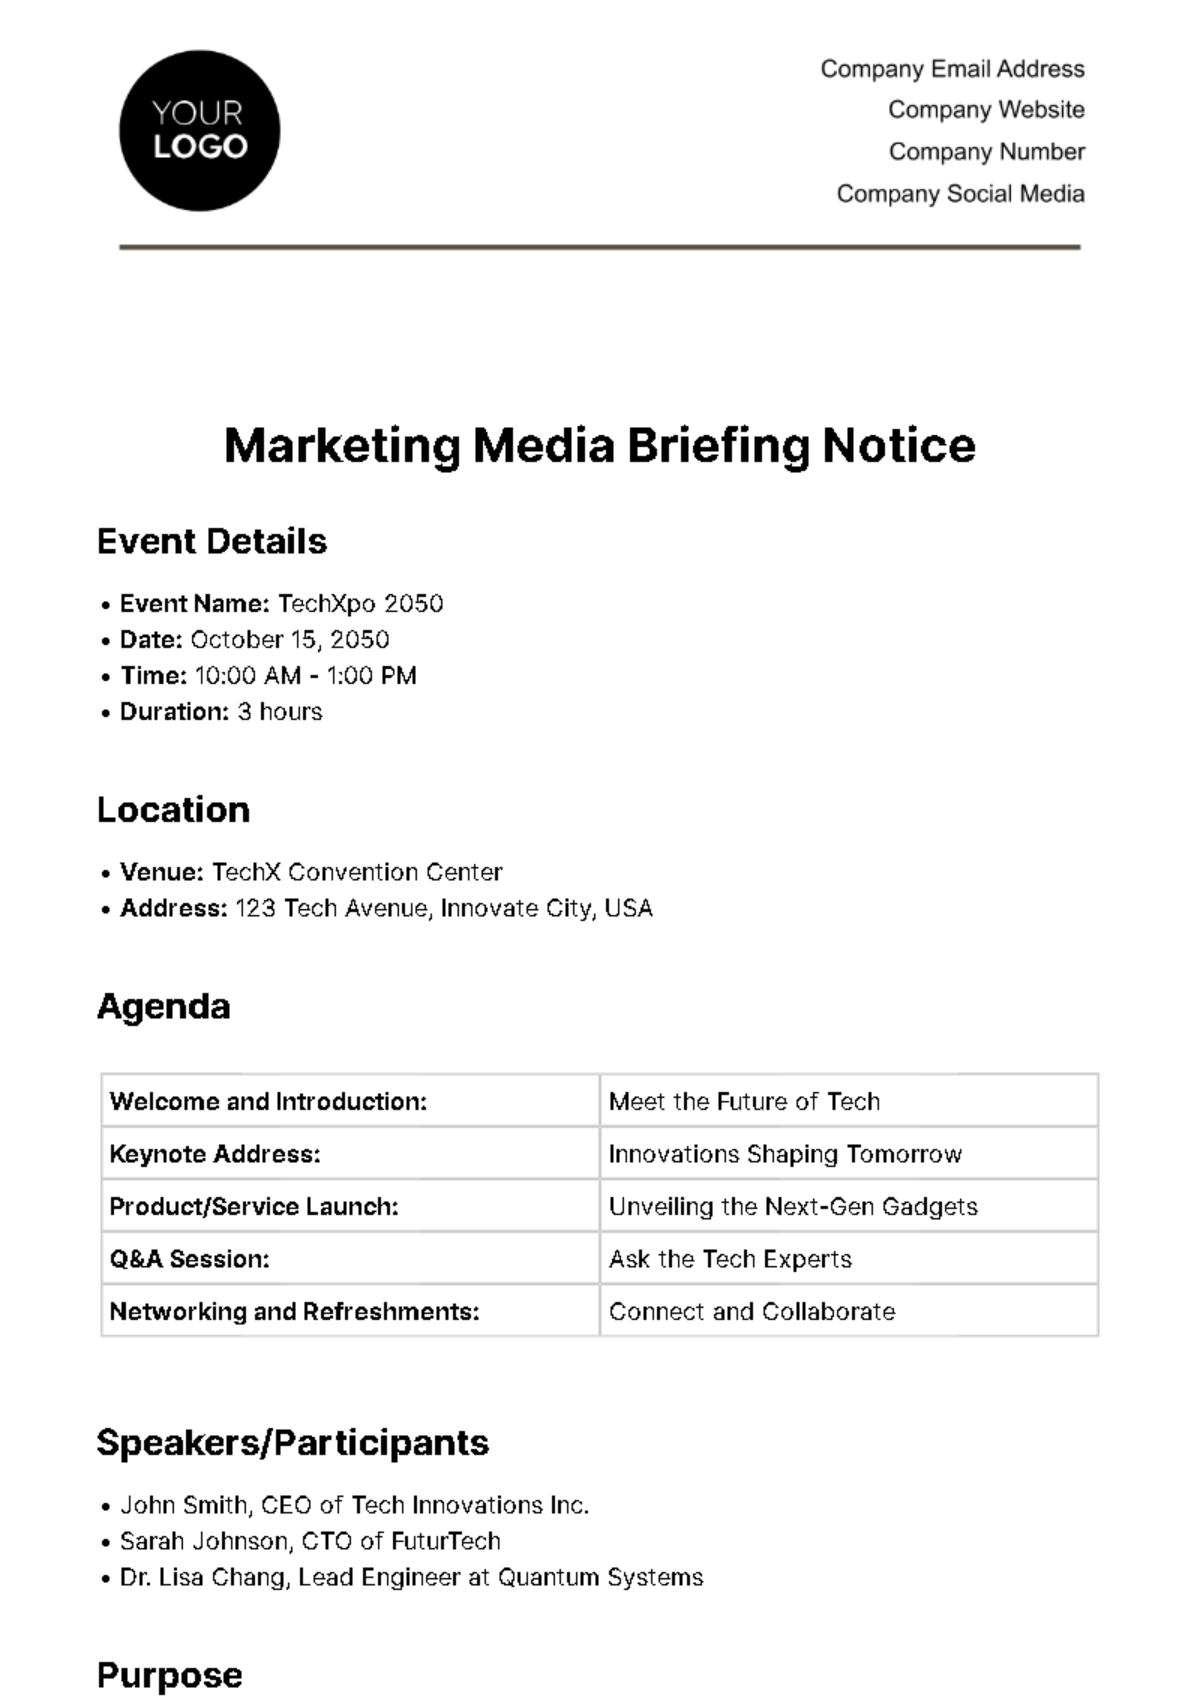 Free Marketing Media Briefing Notice Template